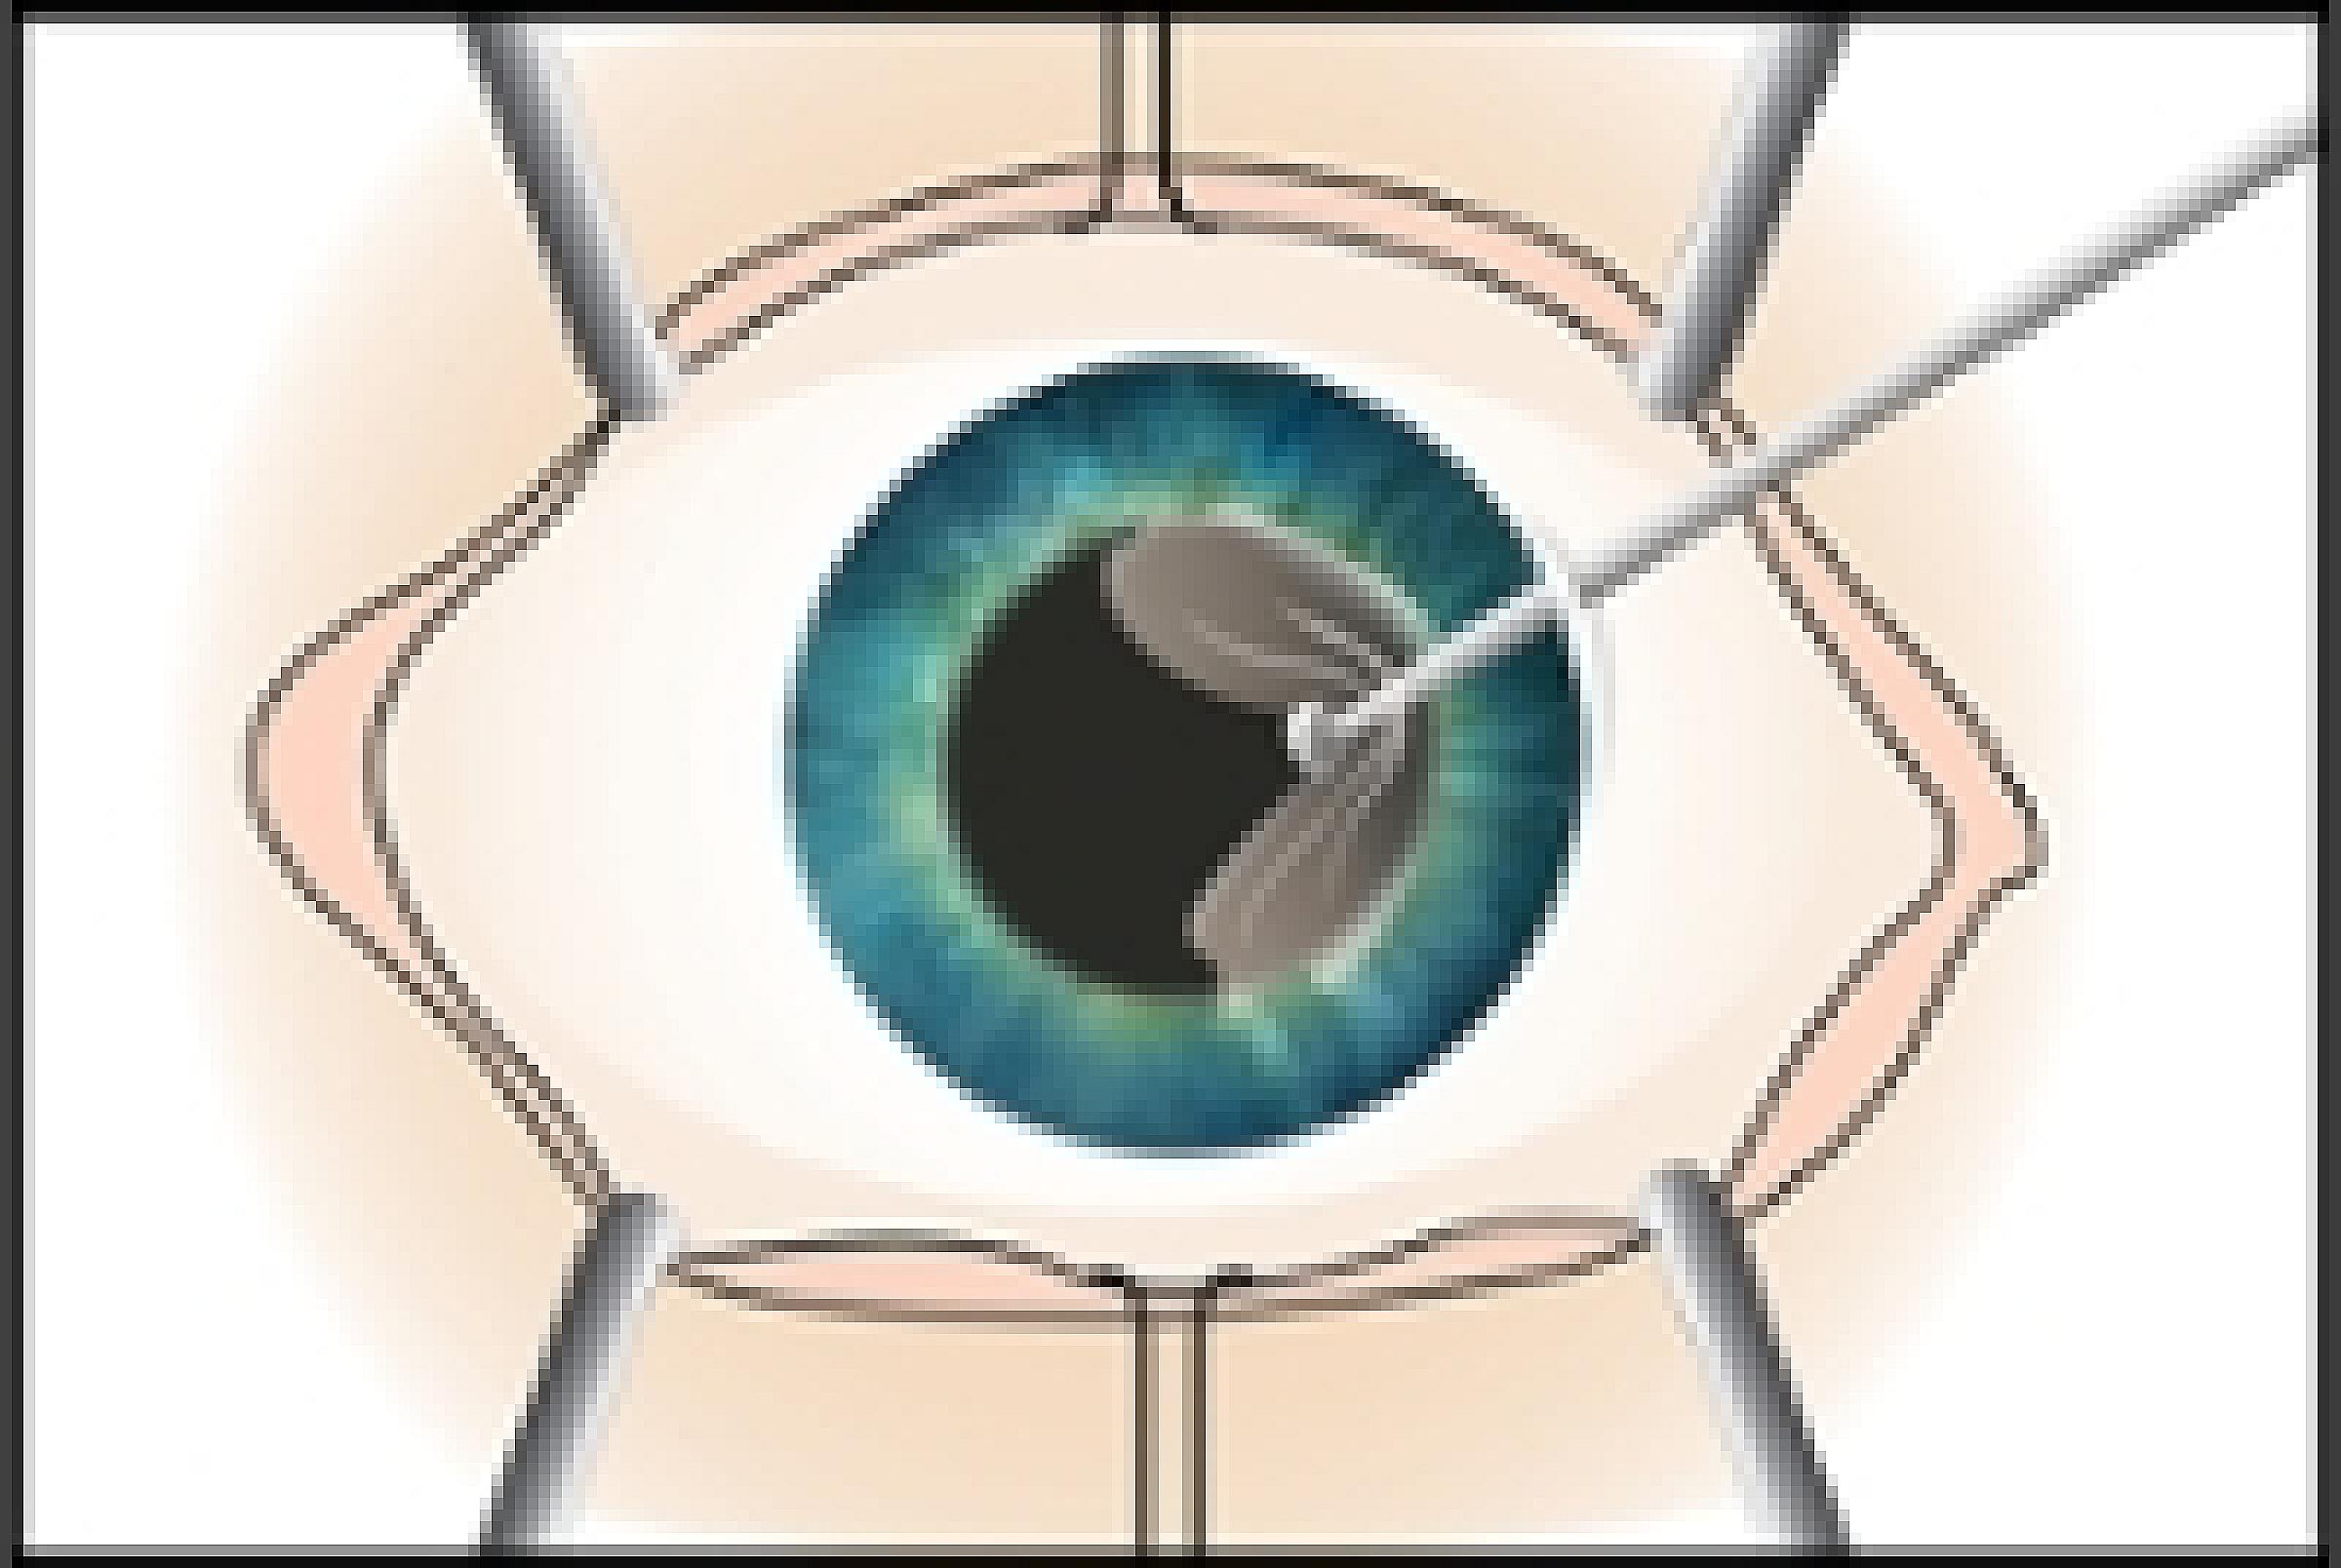 Surgeon removes the diseased/ damaged cornea